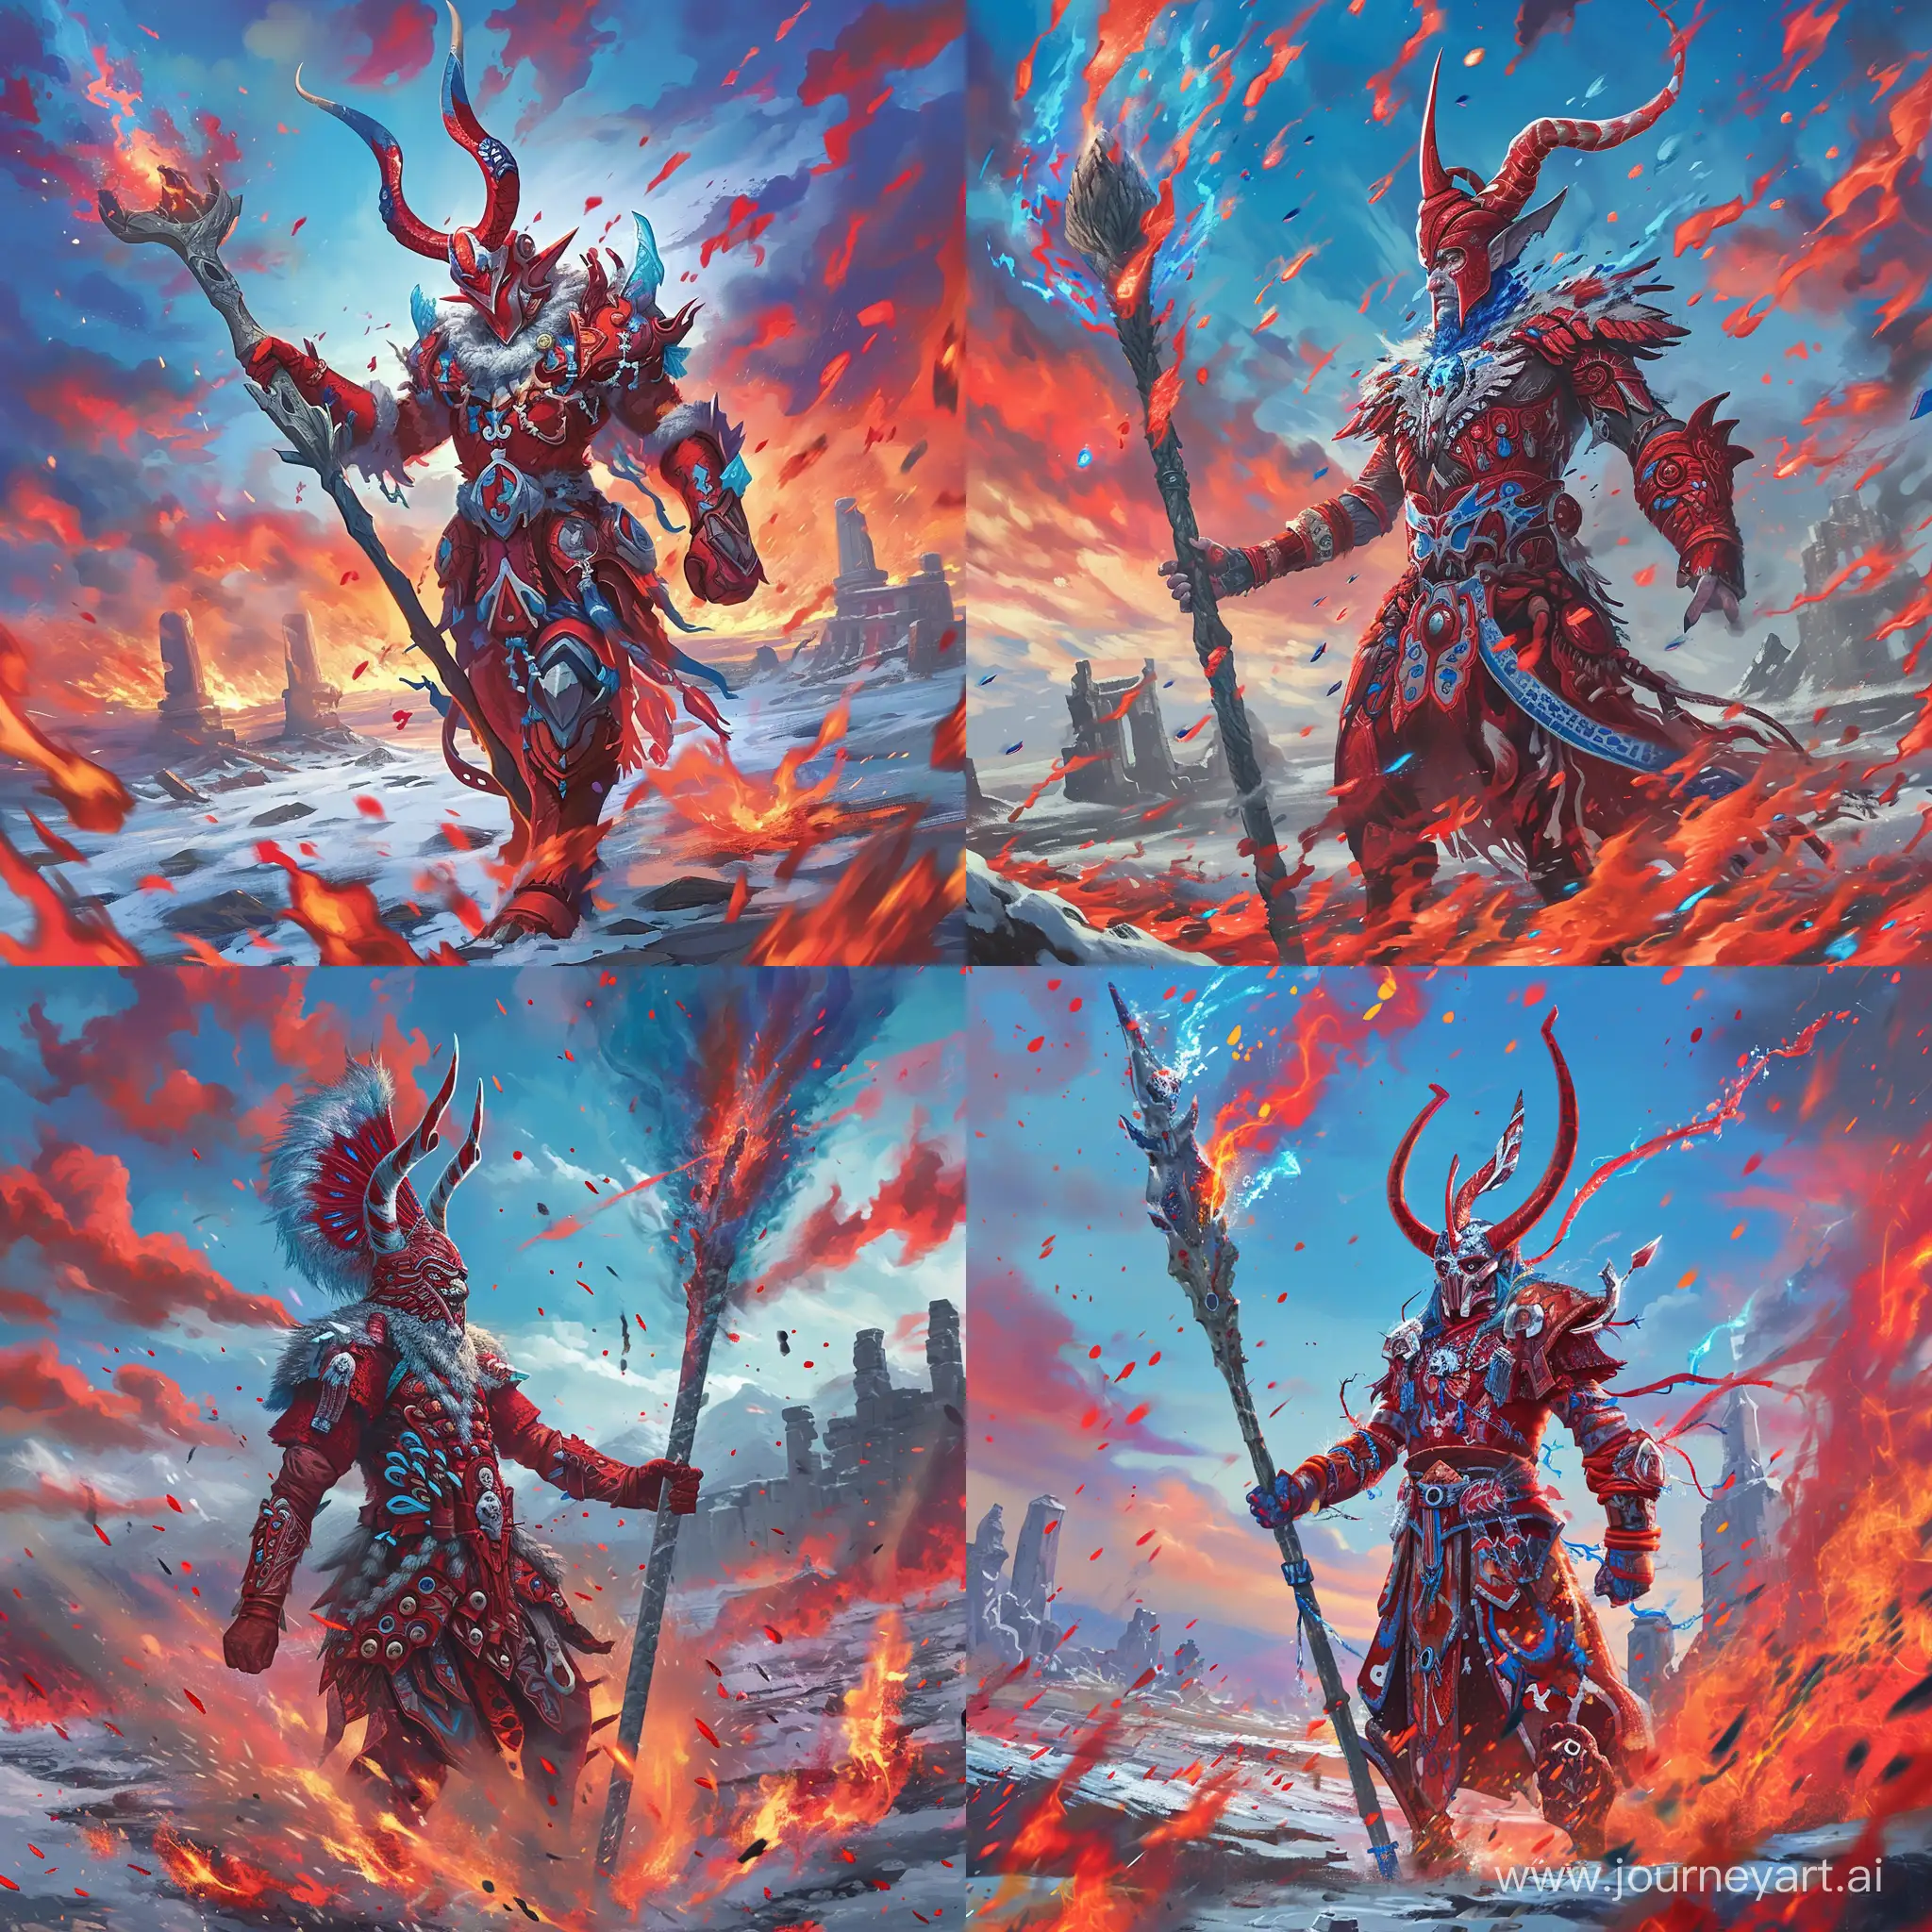 Fiery-Warrior-with-Staff-in-Snowy-Ruins